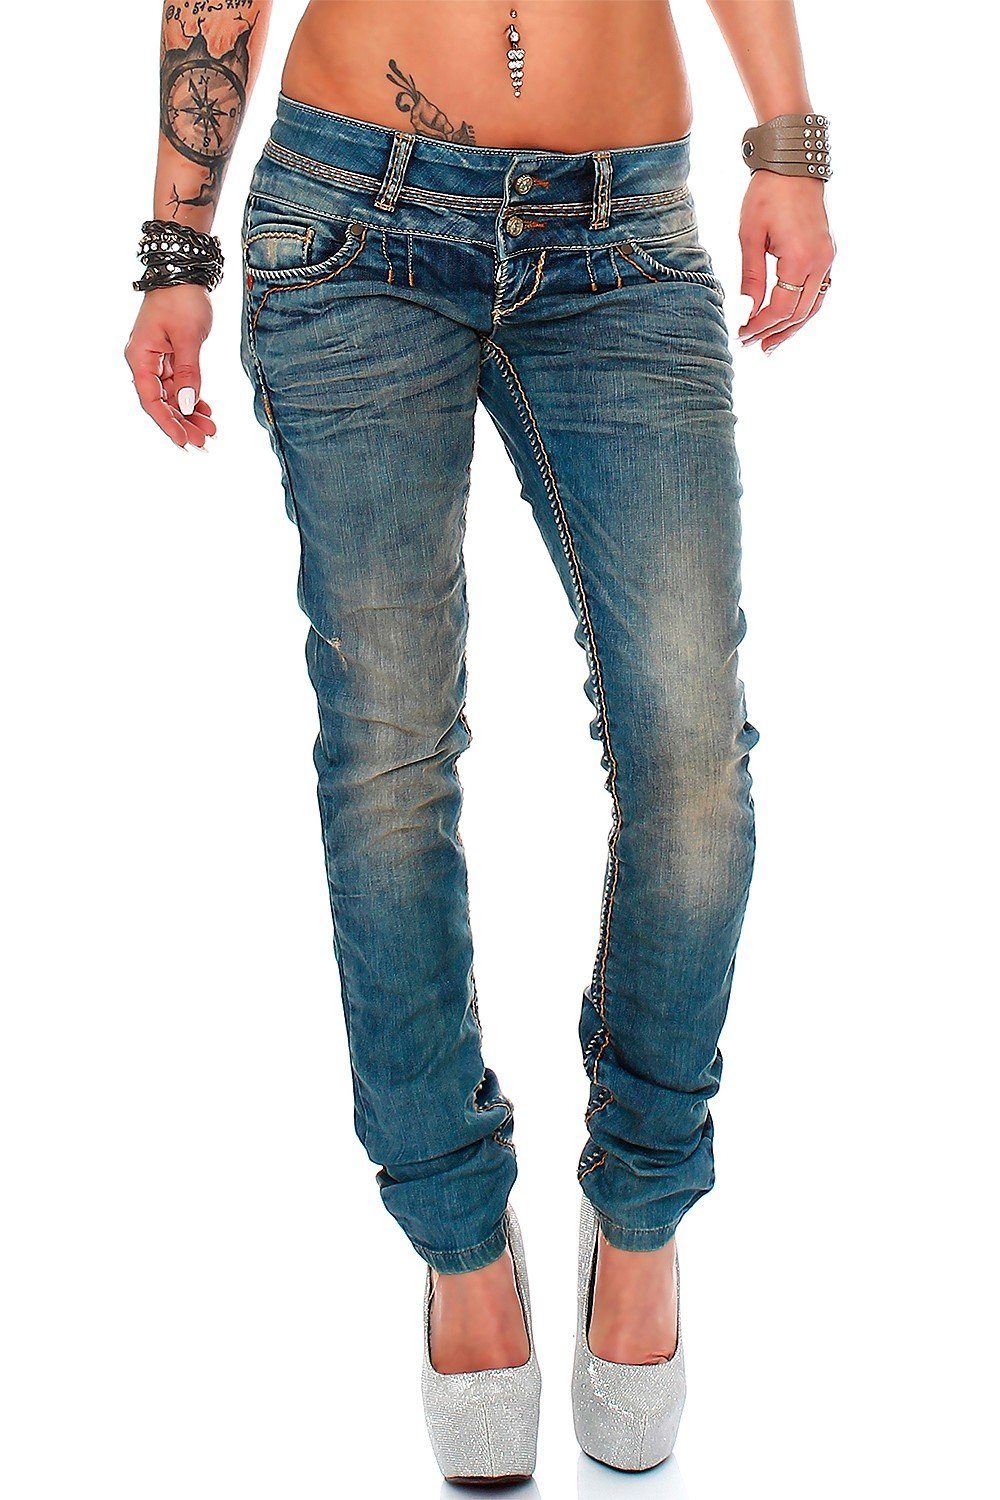 legemliggøre lava Modernisere Cipo & Baxx 5-Pocket-Jeans Damen Hose BA-CBW0347 Low Waist mit dicken Nähten